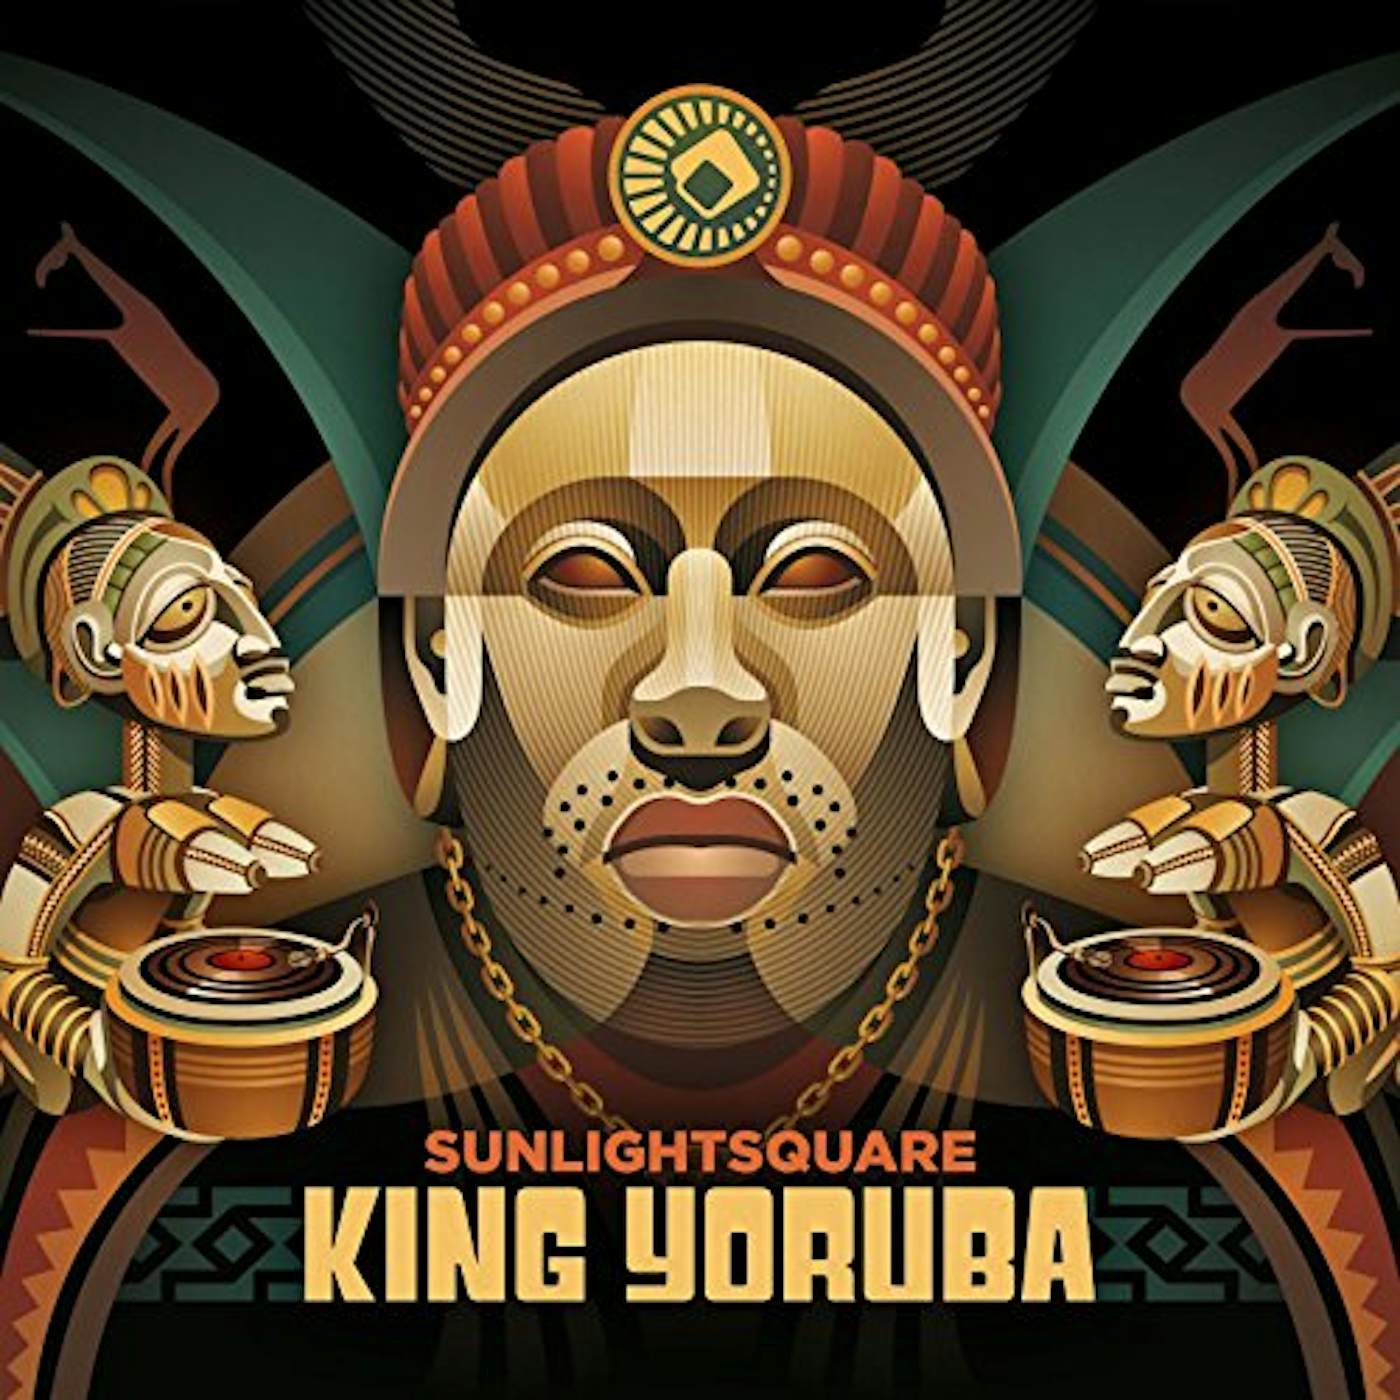 Sunlightsquare KING YORUBA CD